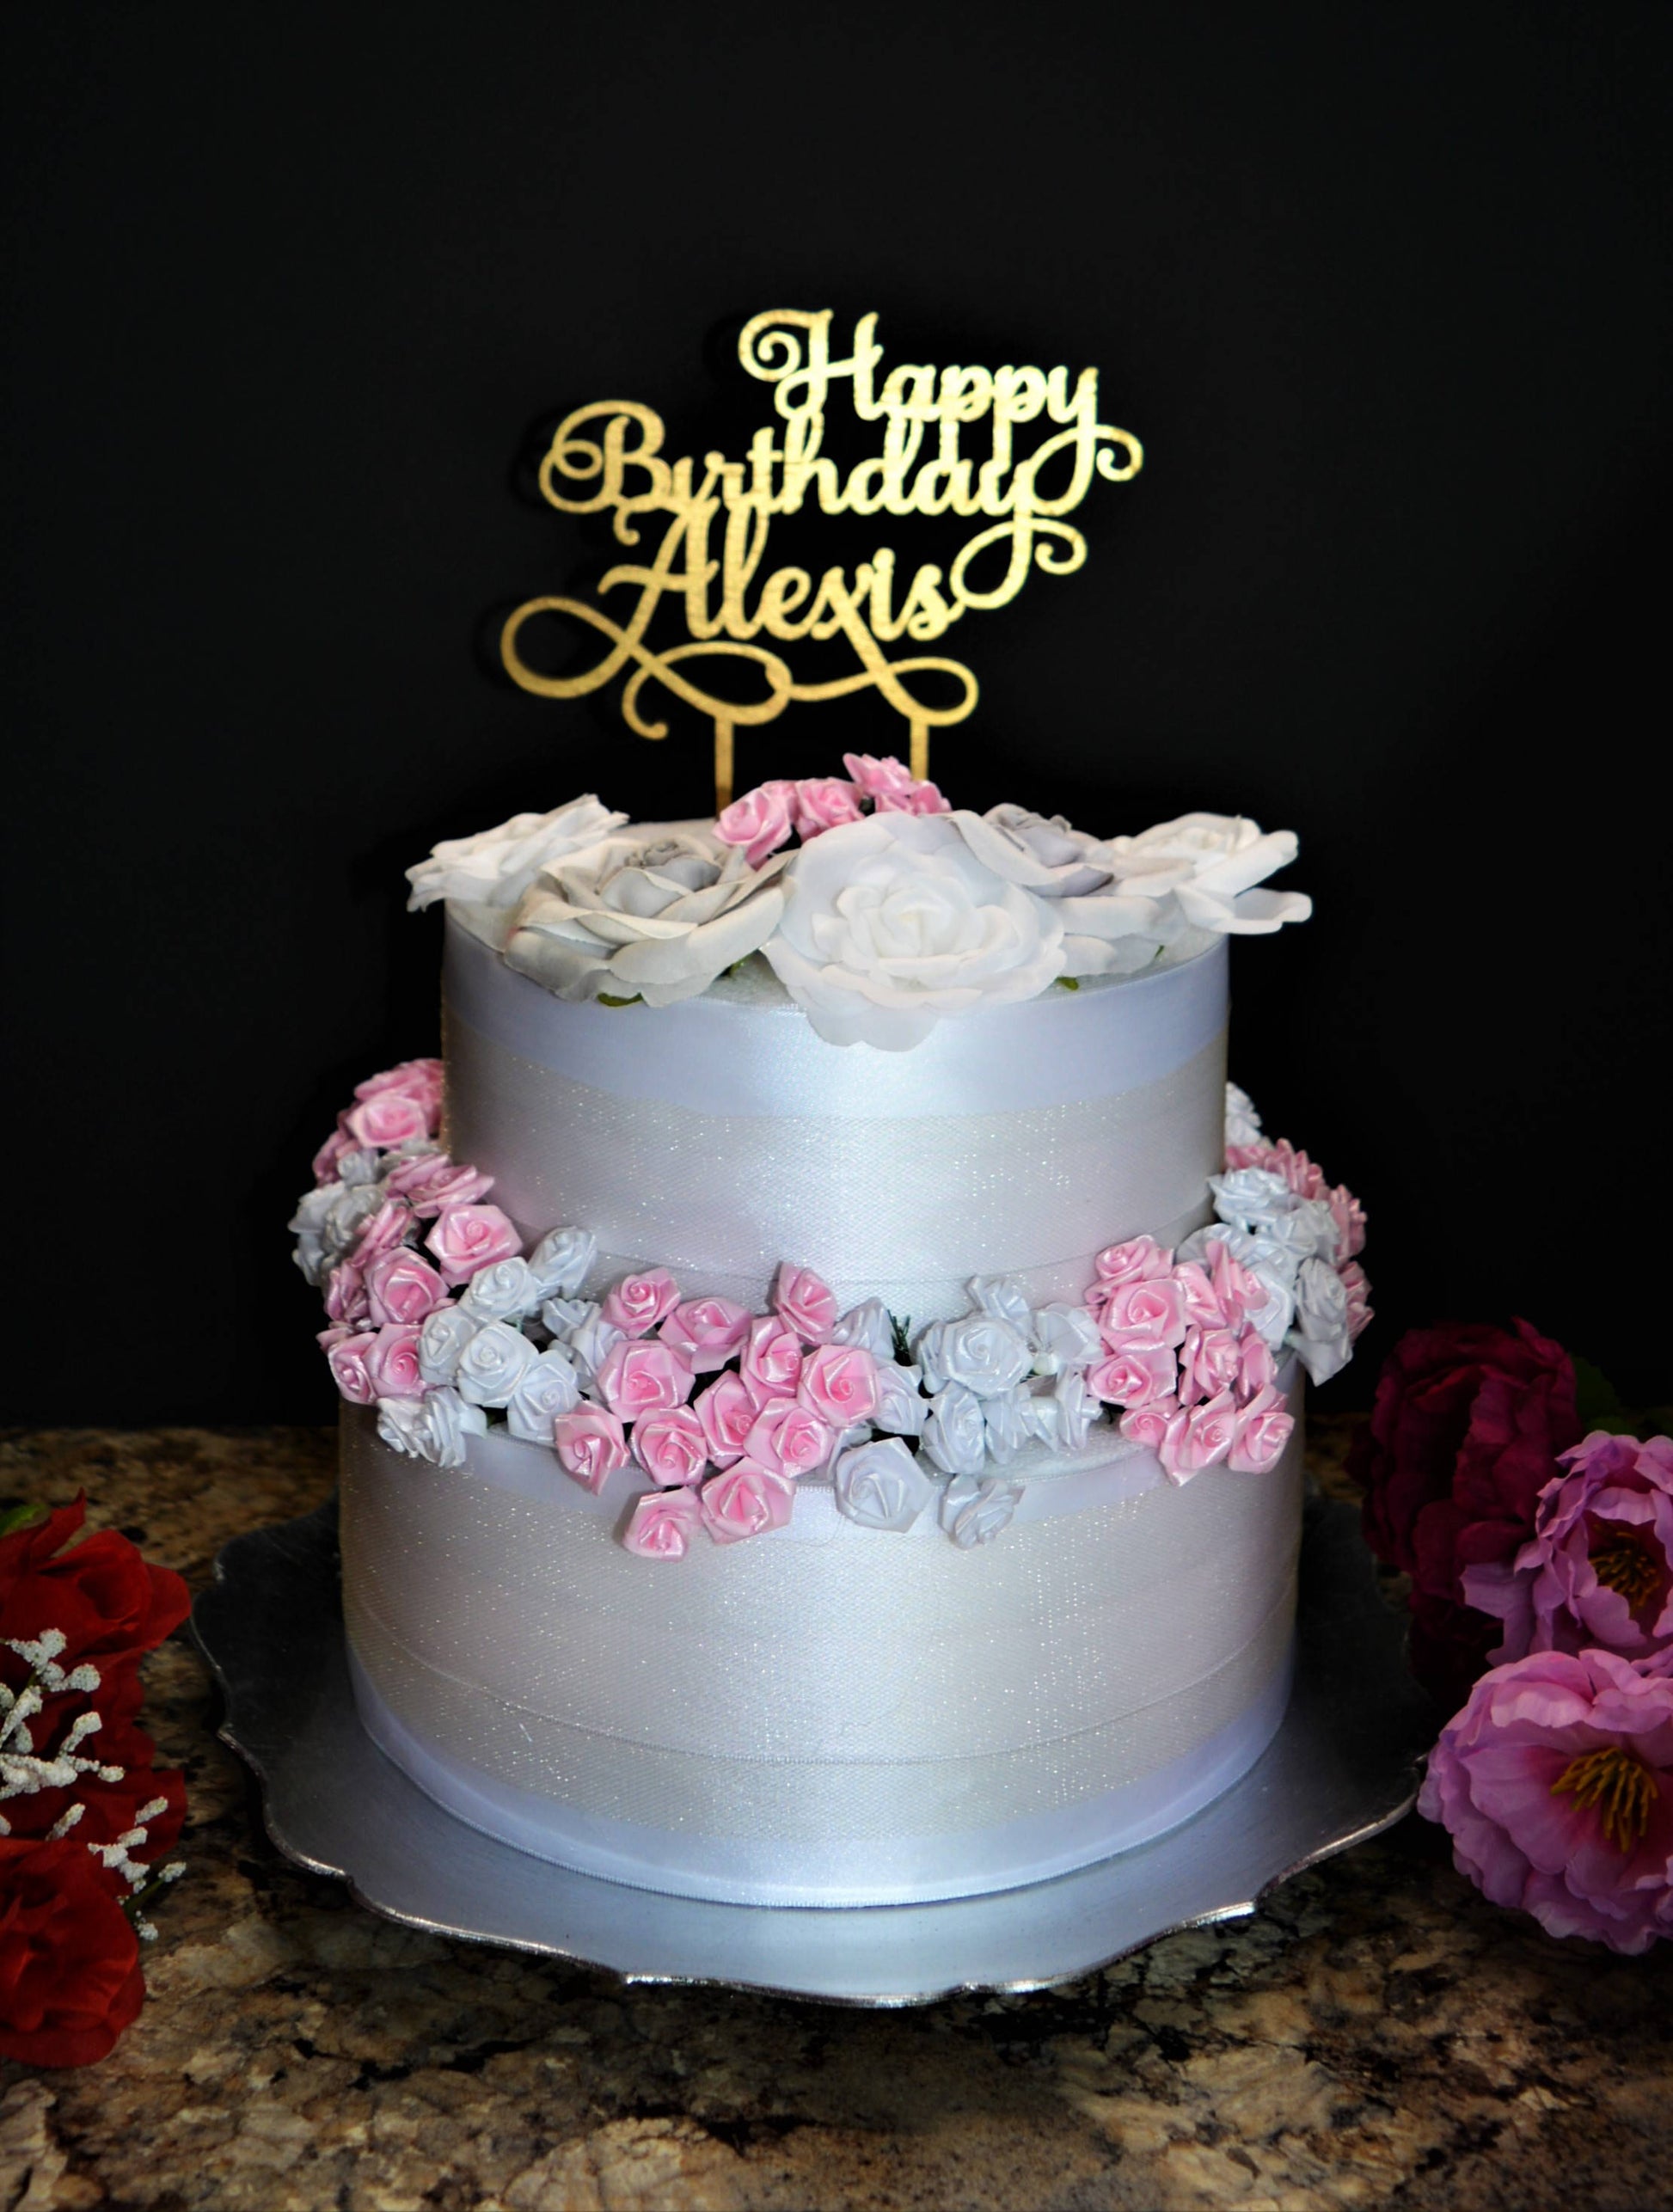 Customized Happy Birthday Cake Topper